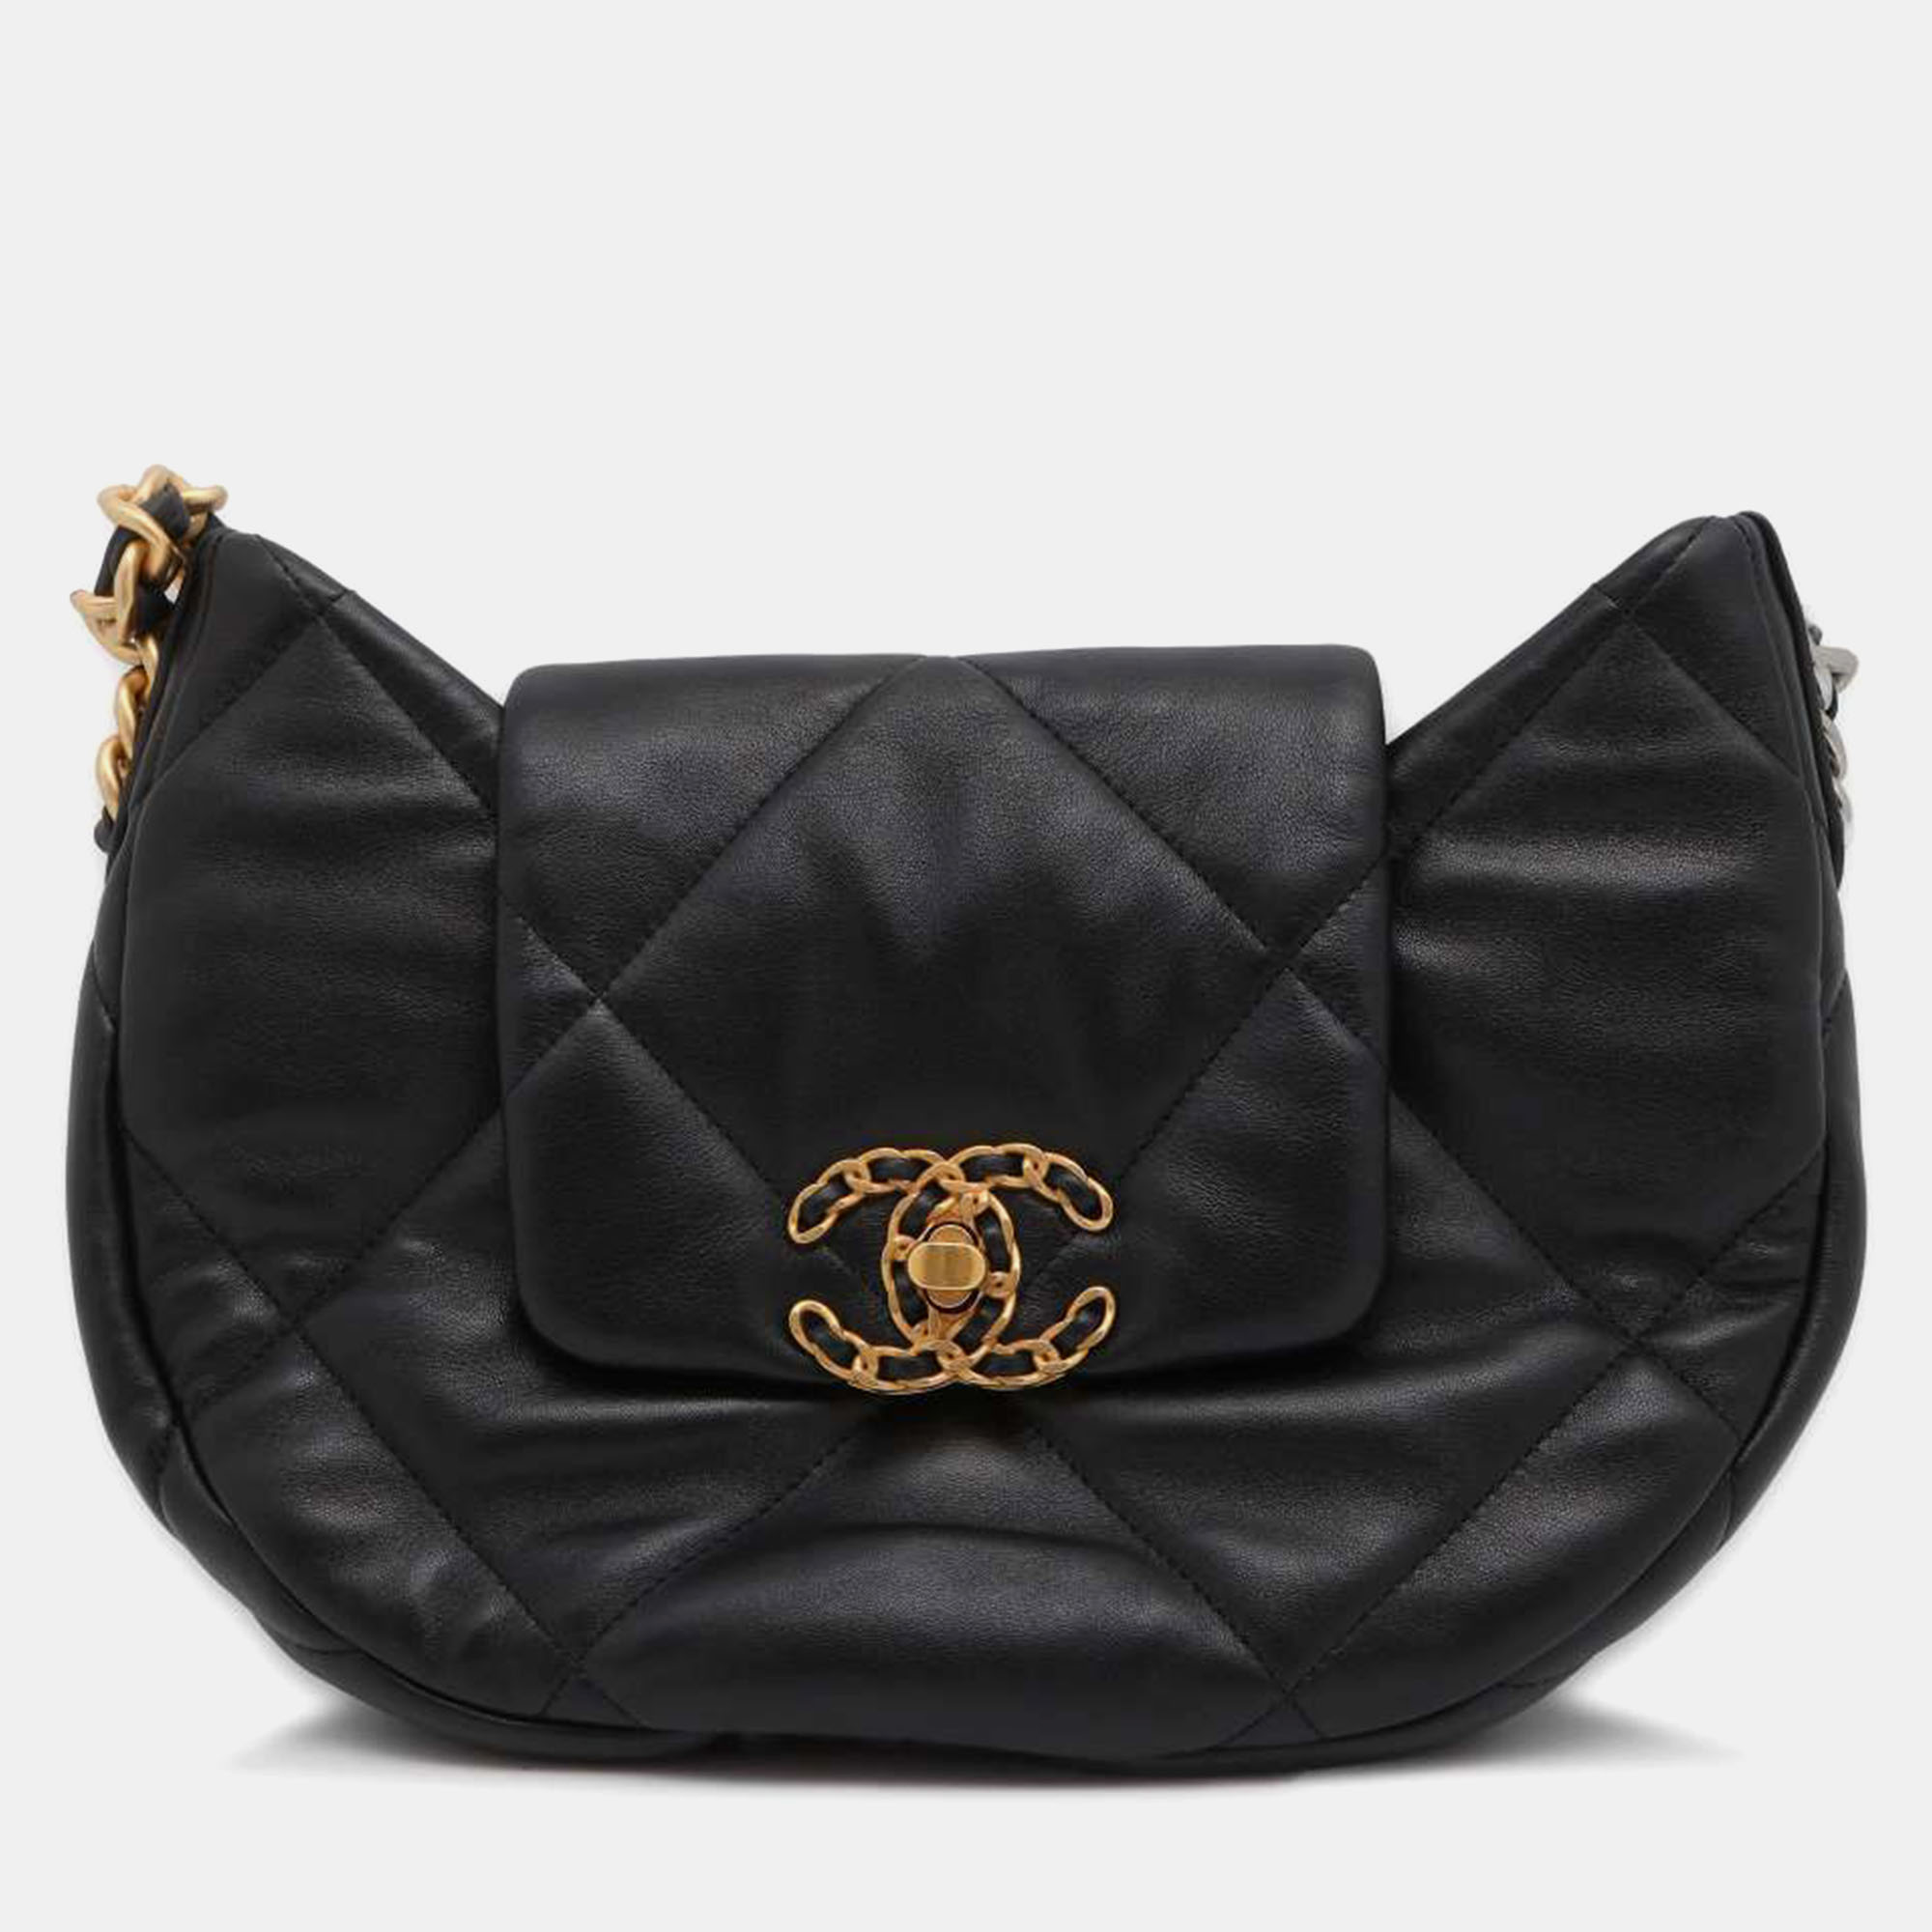 Chanel black leather 19 flap bag